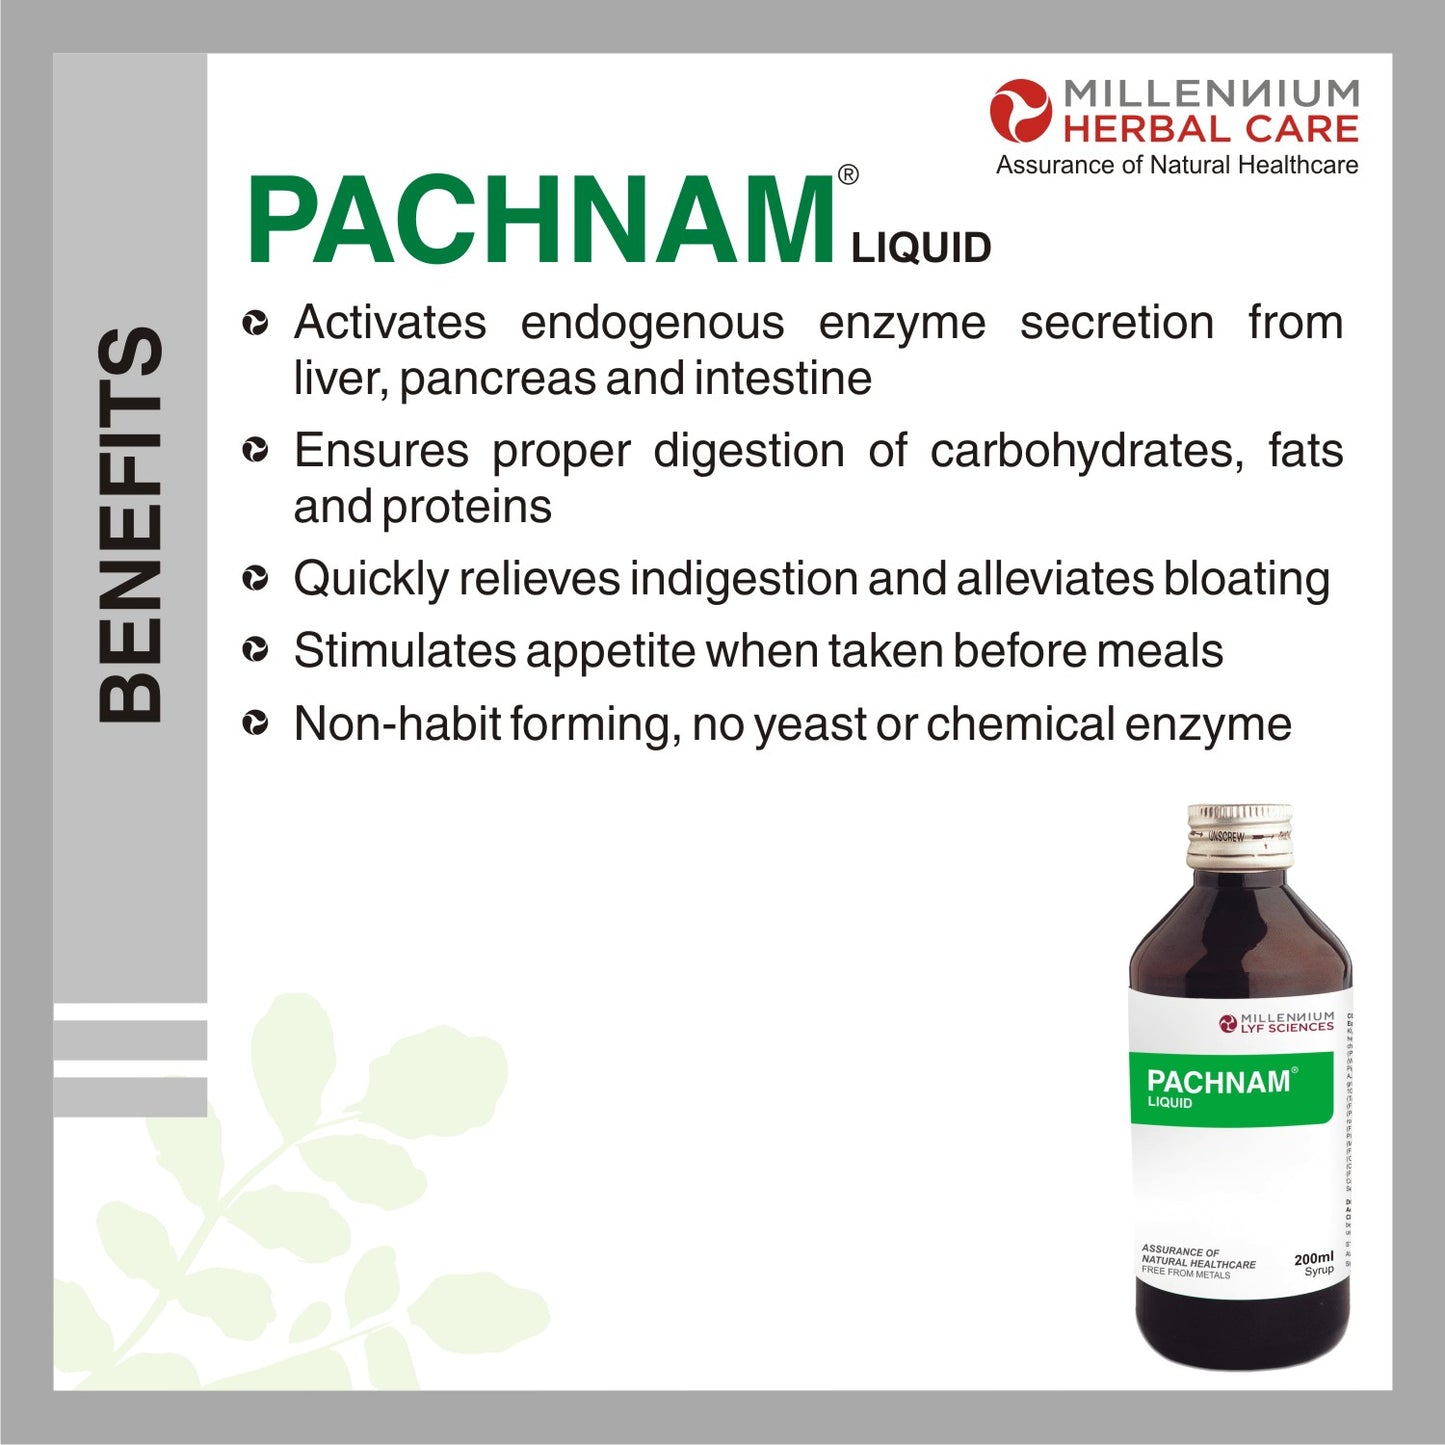 Benefits of Pachnam Liquid